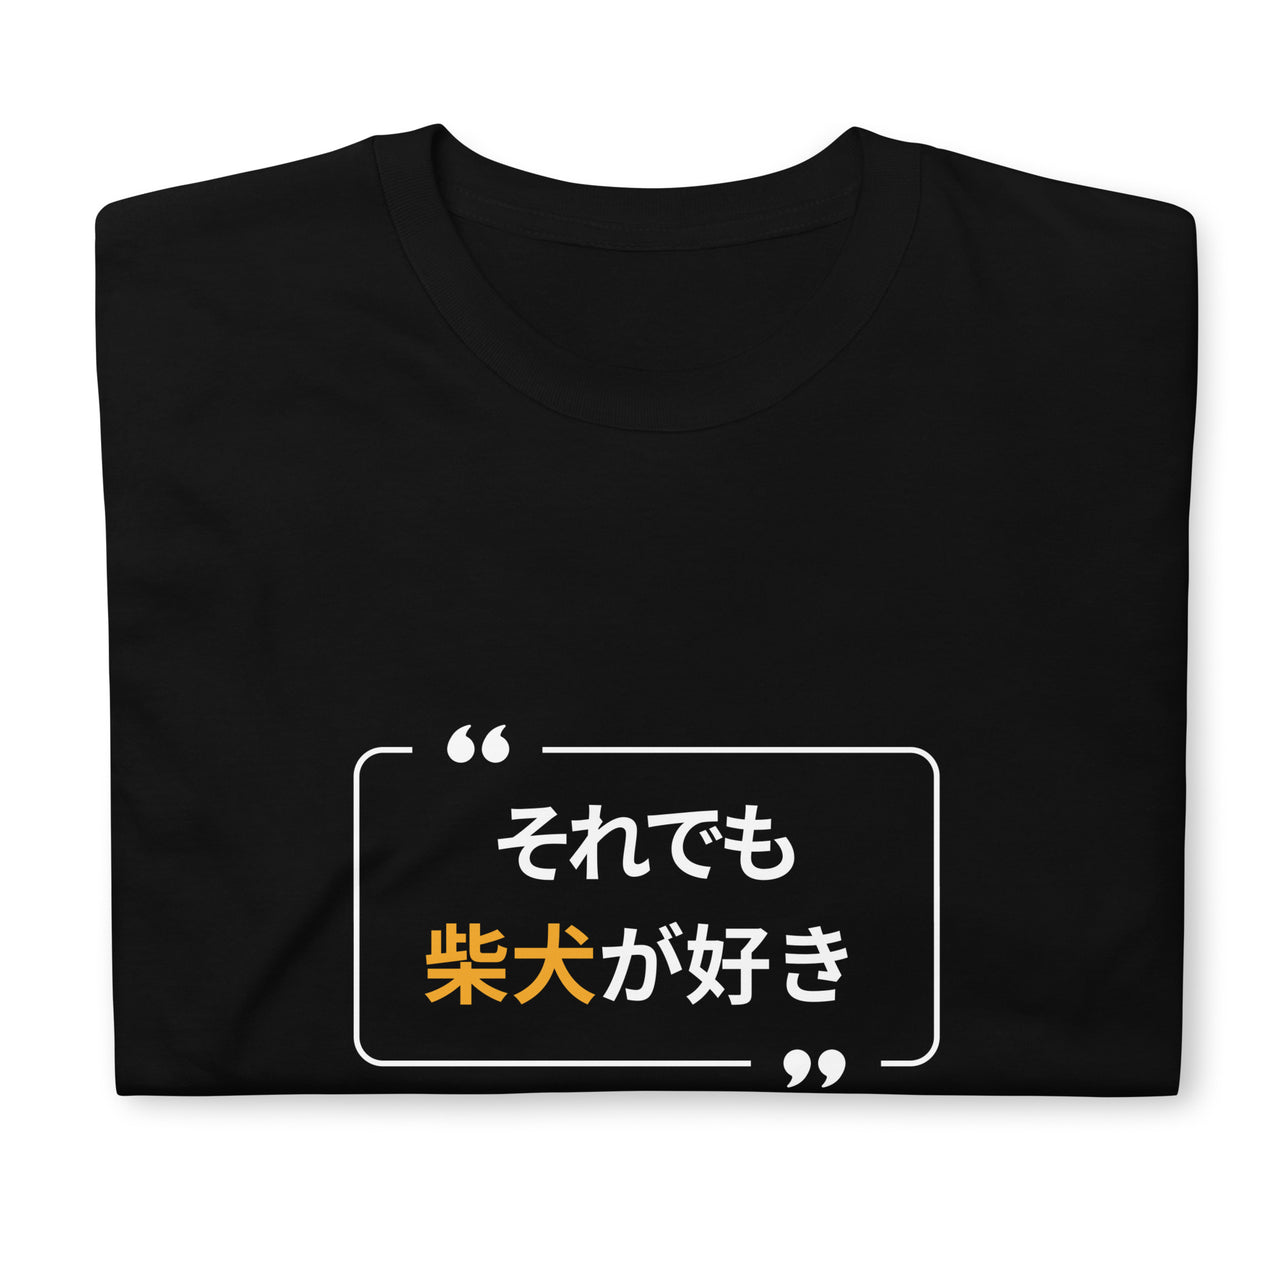 Even Still, I like Shibainu T-Shirt